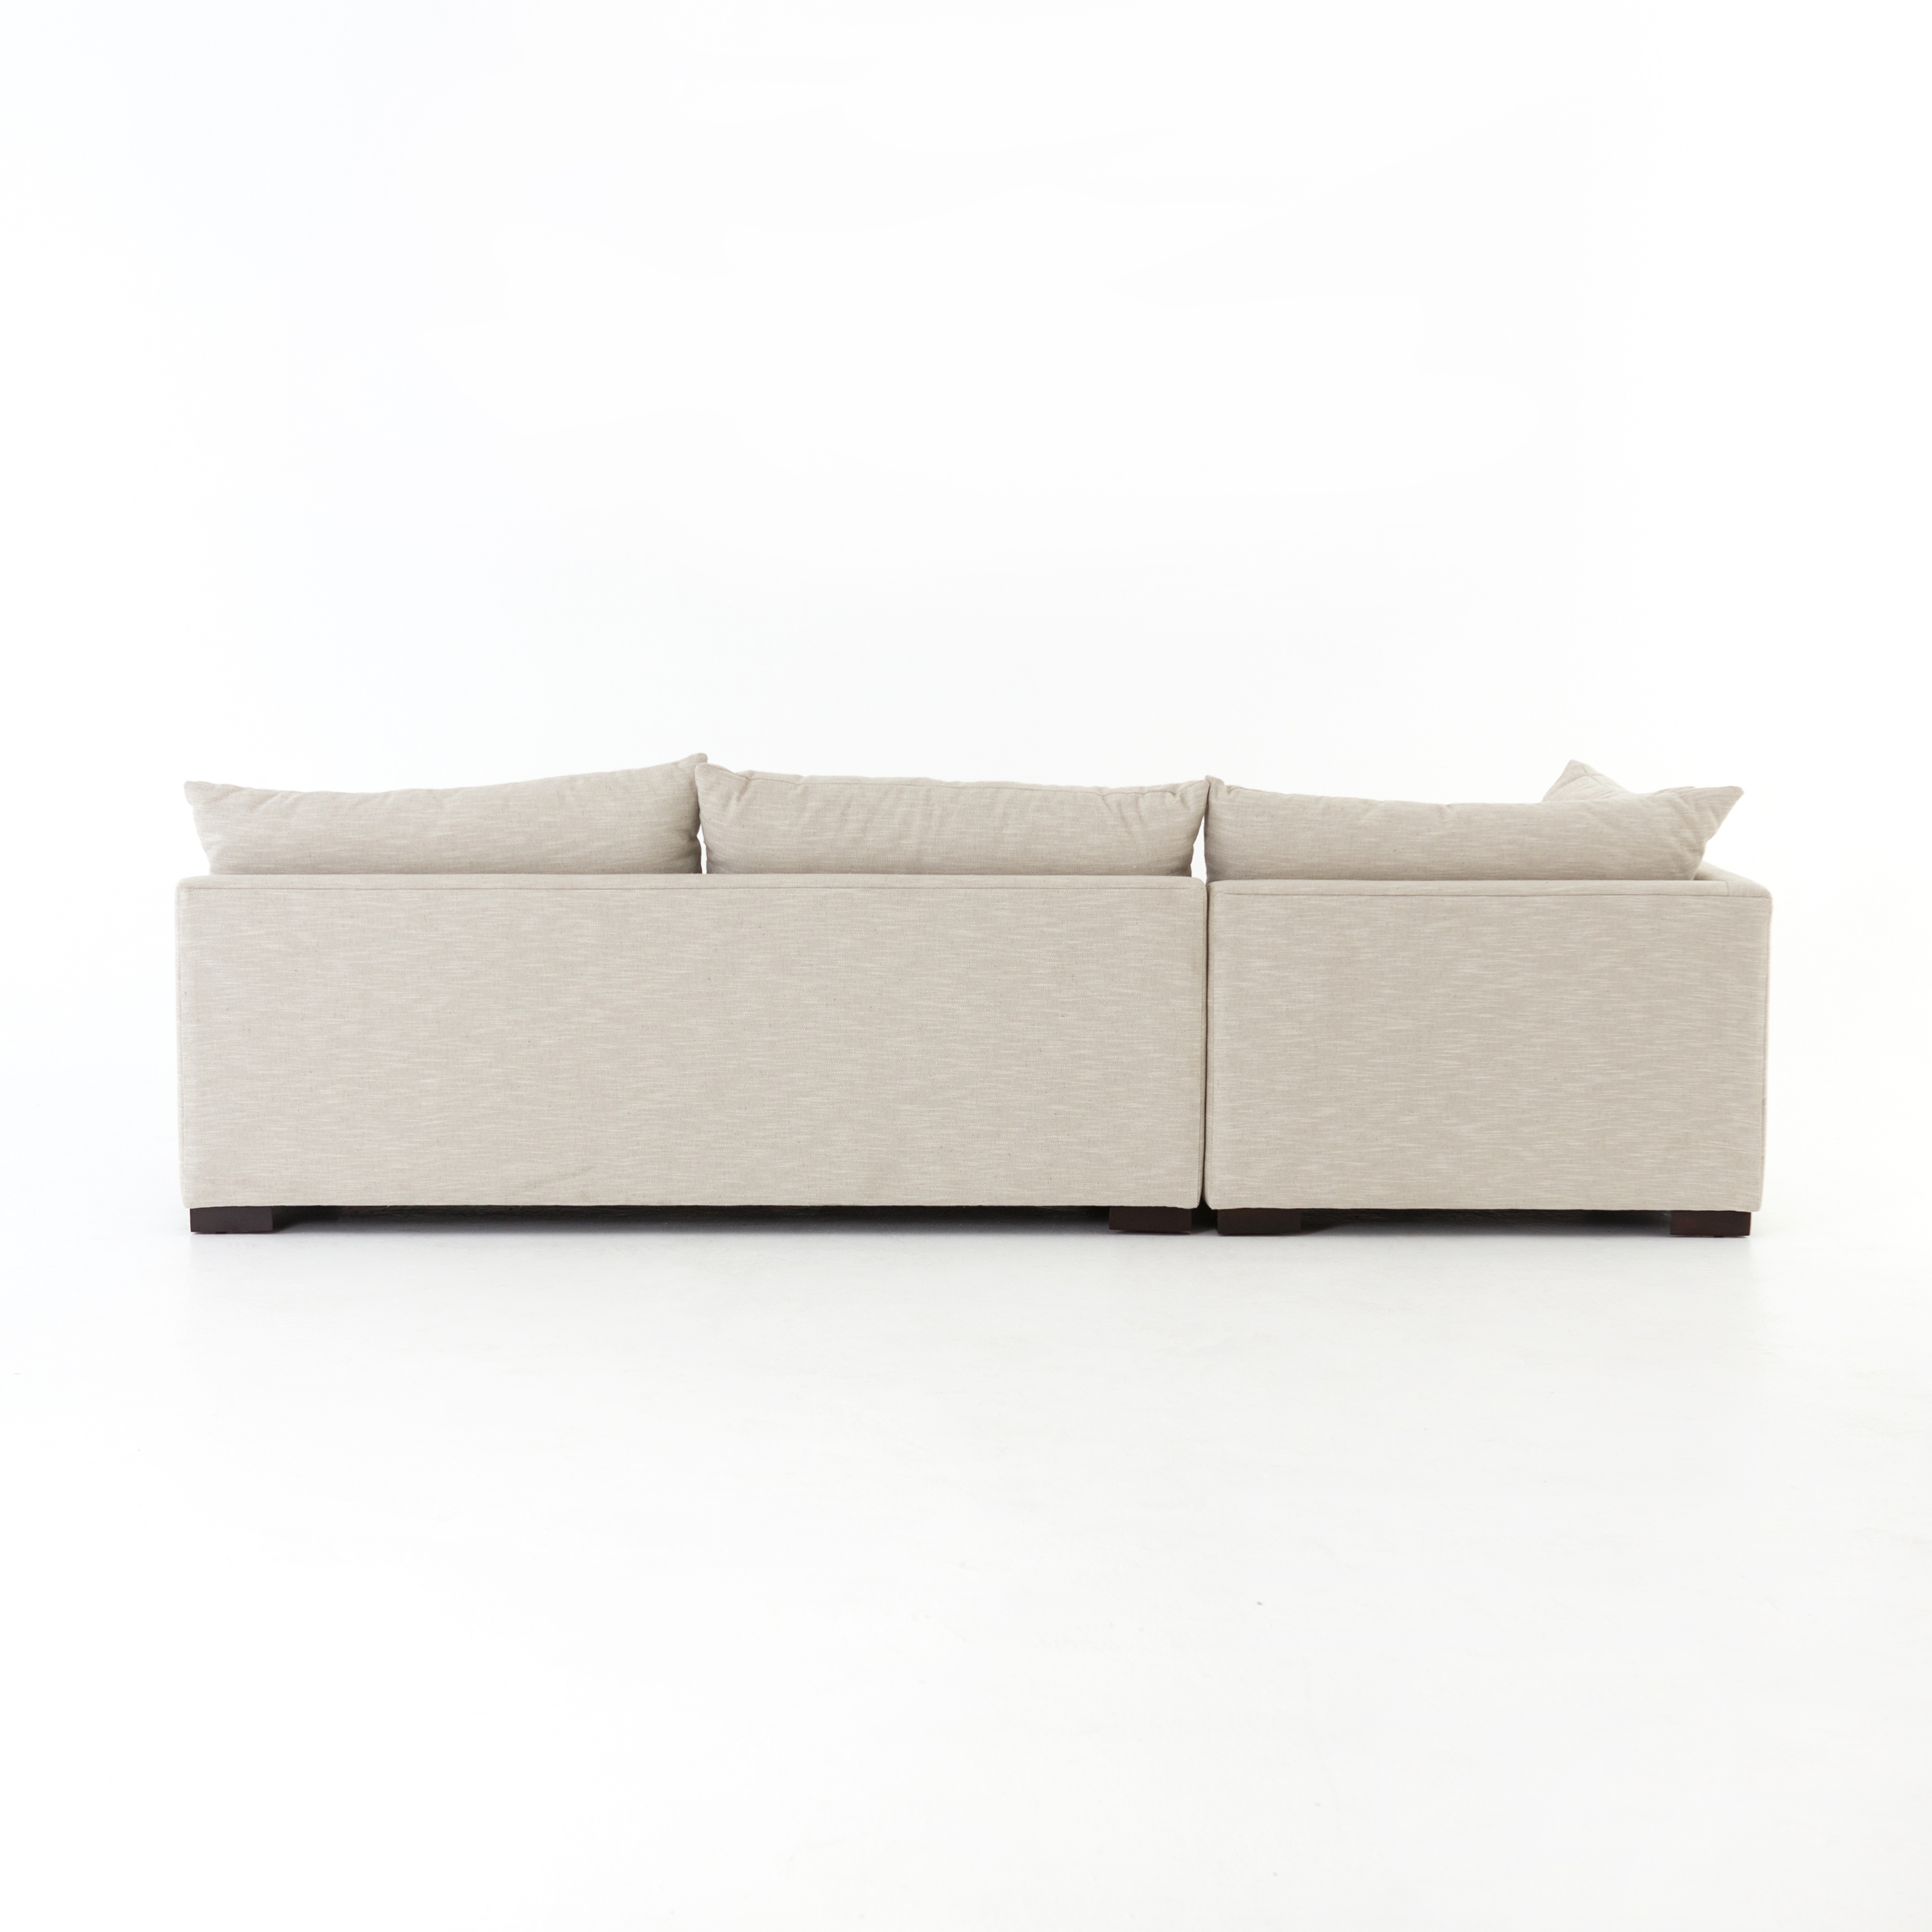 Decima Sectional Sofa - Image 8